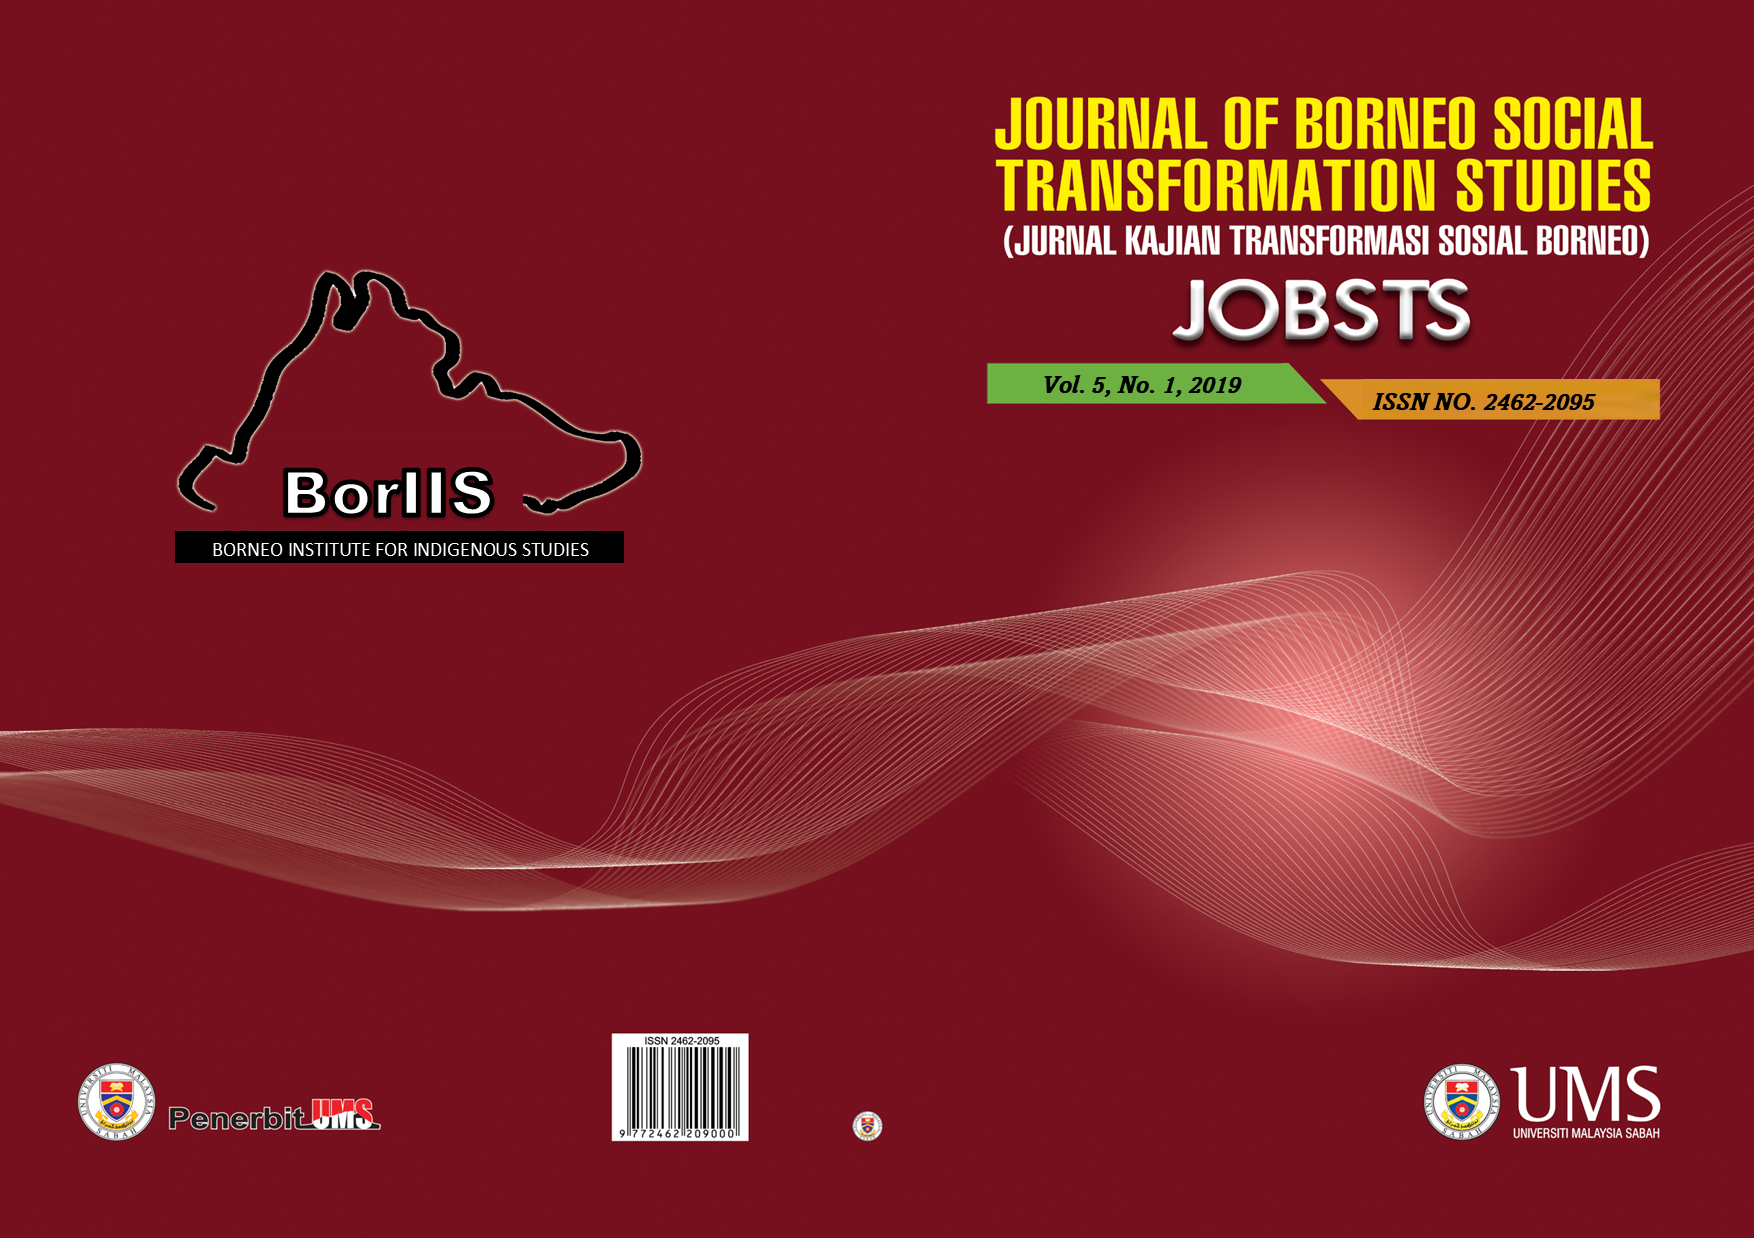 					View Vol. 5 No. 1 (2019): Journal of Borneo Social Transformation Studies (JOBSTS) Vol. 5, No. 1, 2019
				